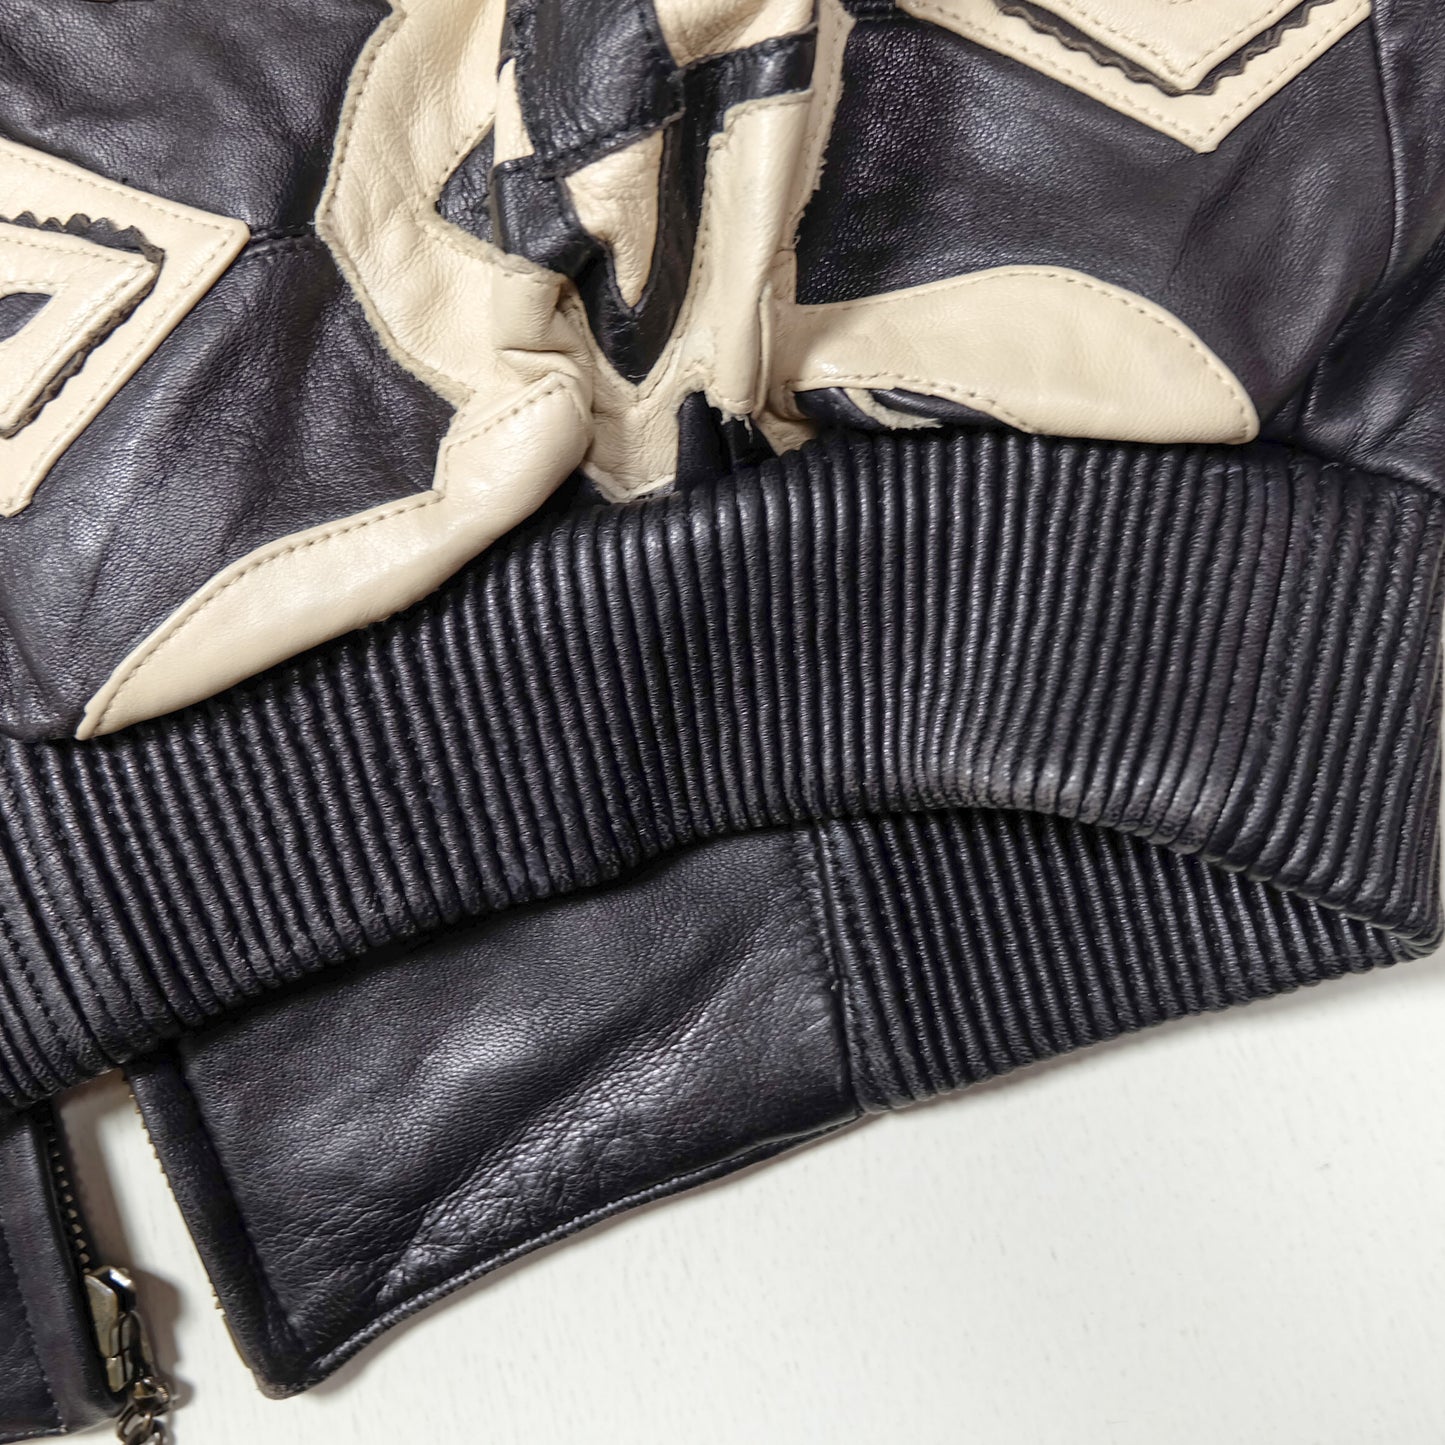 Vintage 90's Hip-hop Pelle Pelle Leather Biker Jacket ( Size : 38 / M )